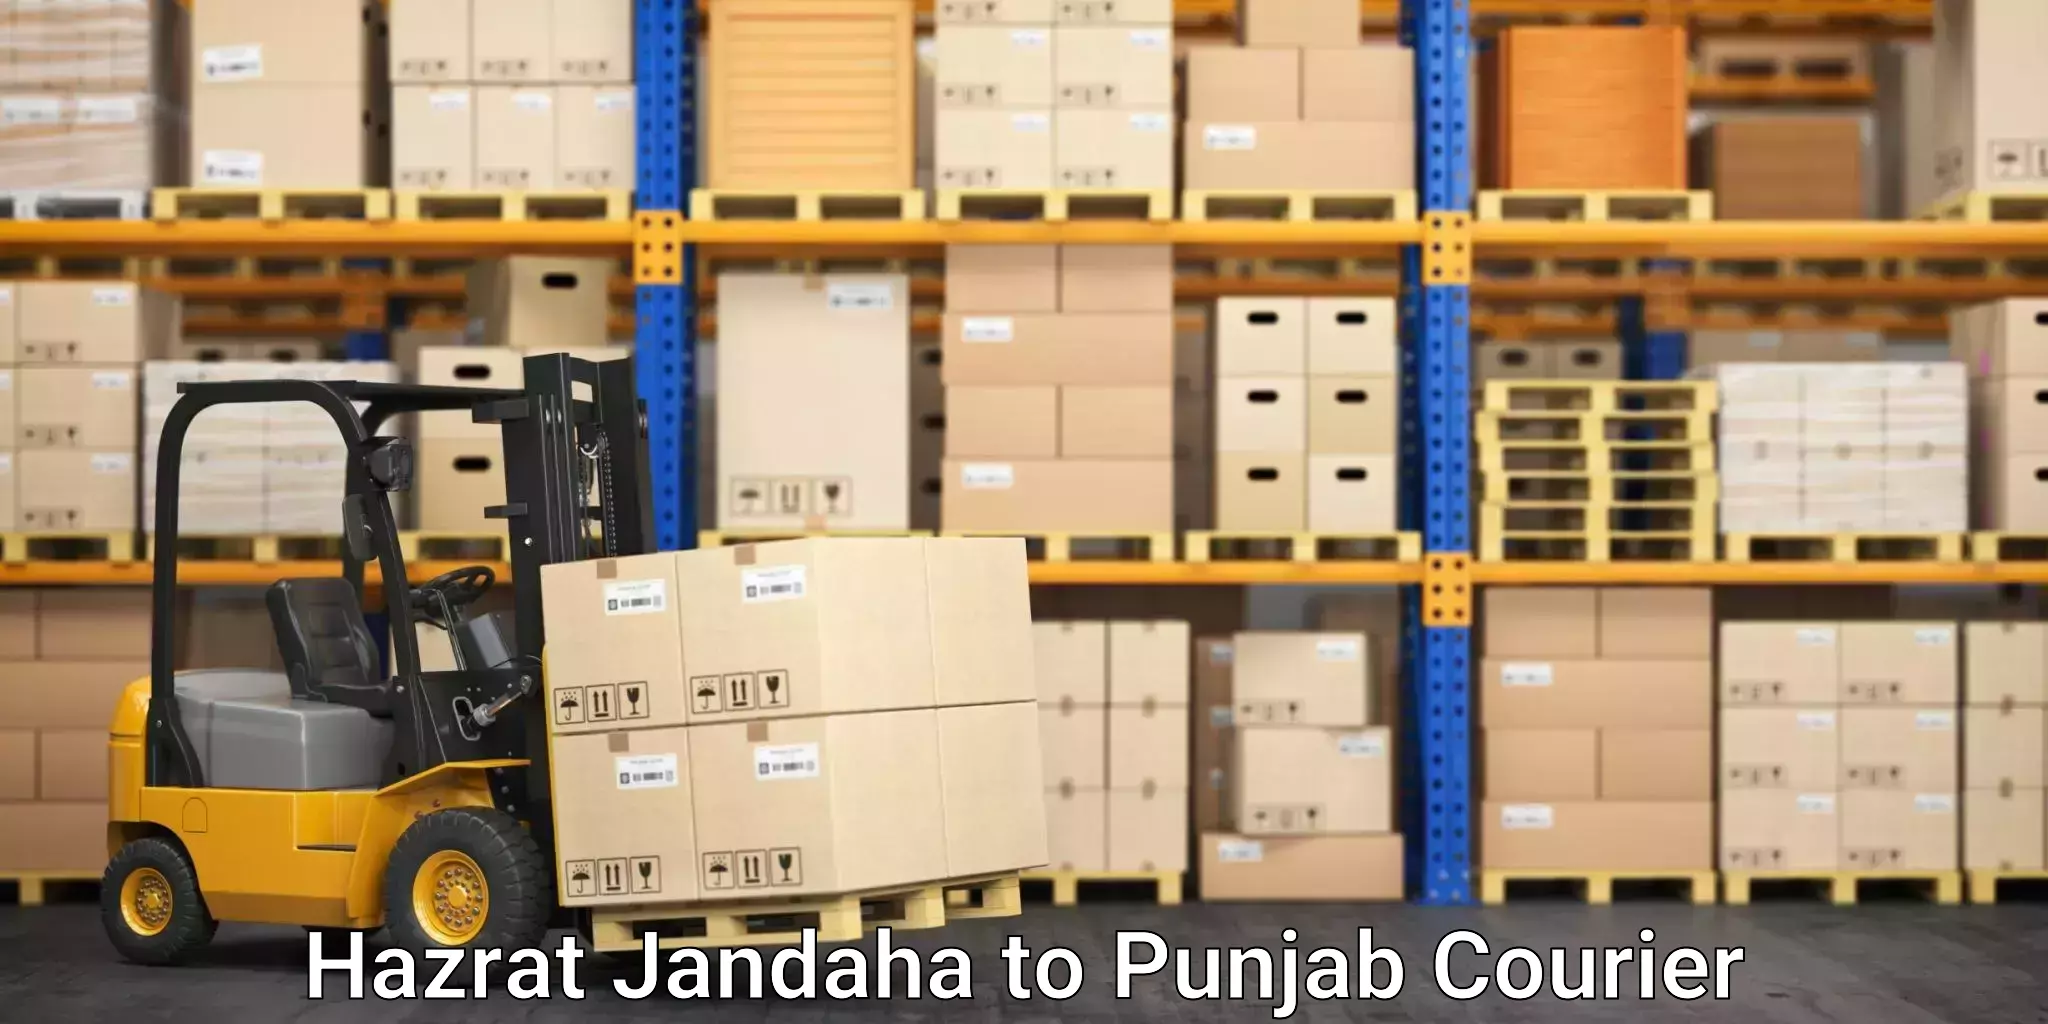 Residential moving experts Hazrat Jandaha to Punjab